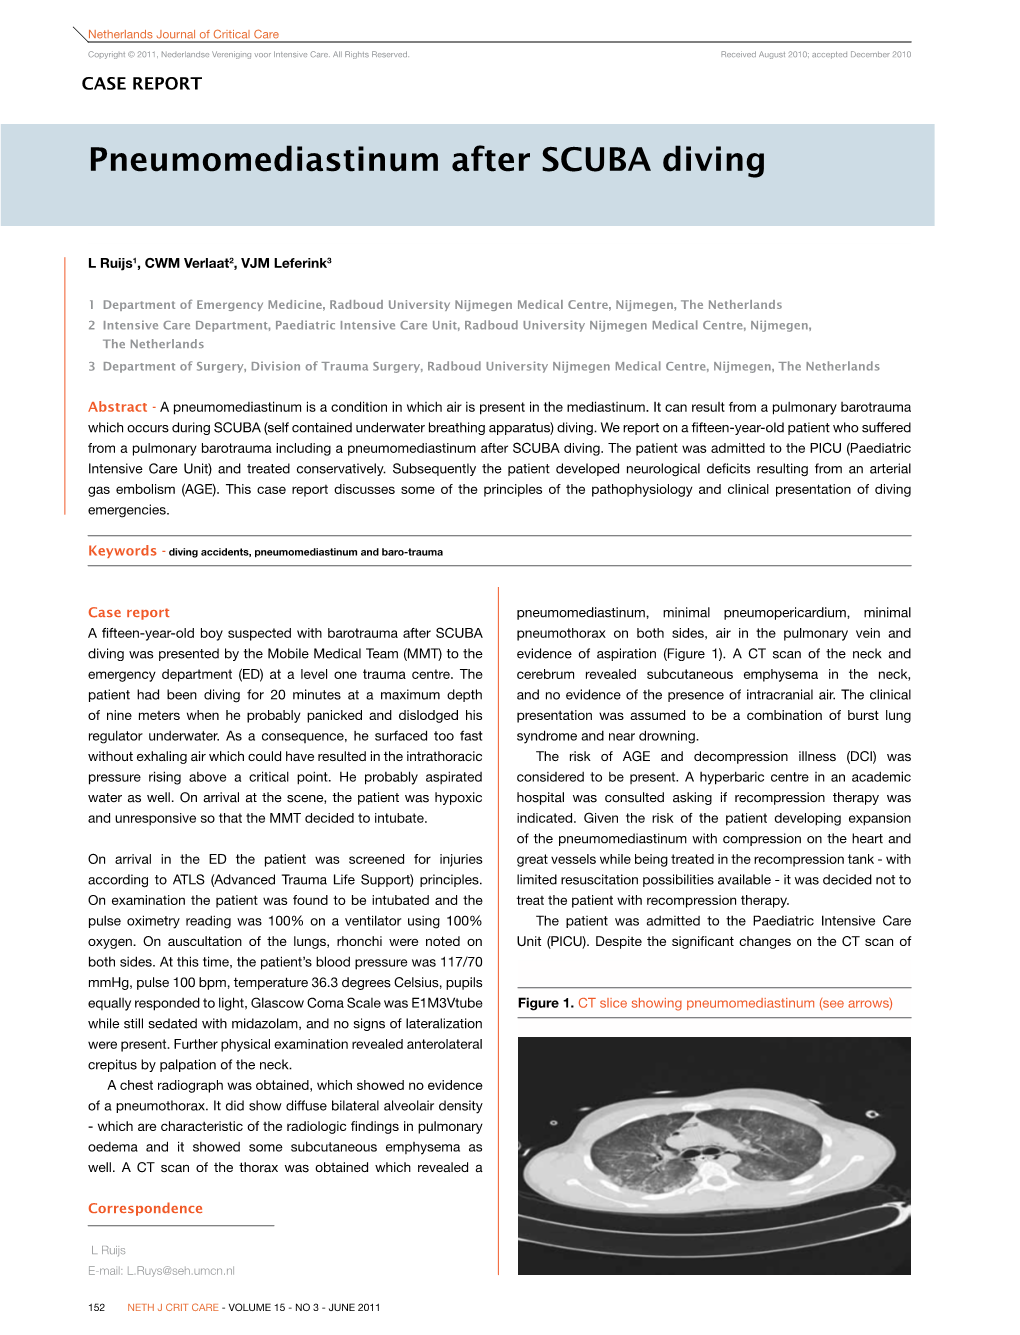 Pneumomediastinum After SCUBA Diving